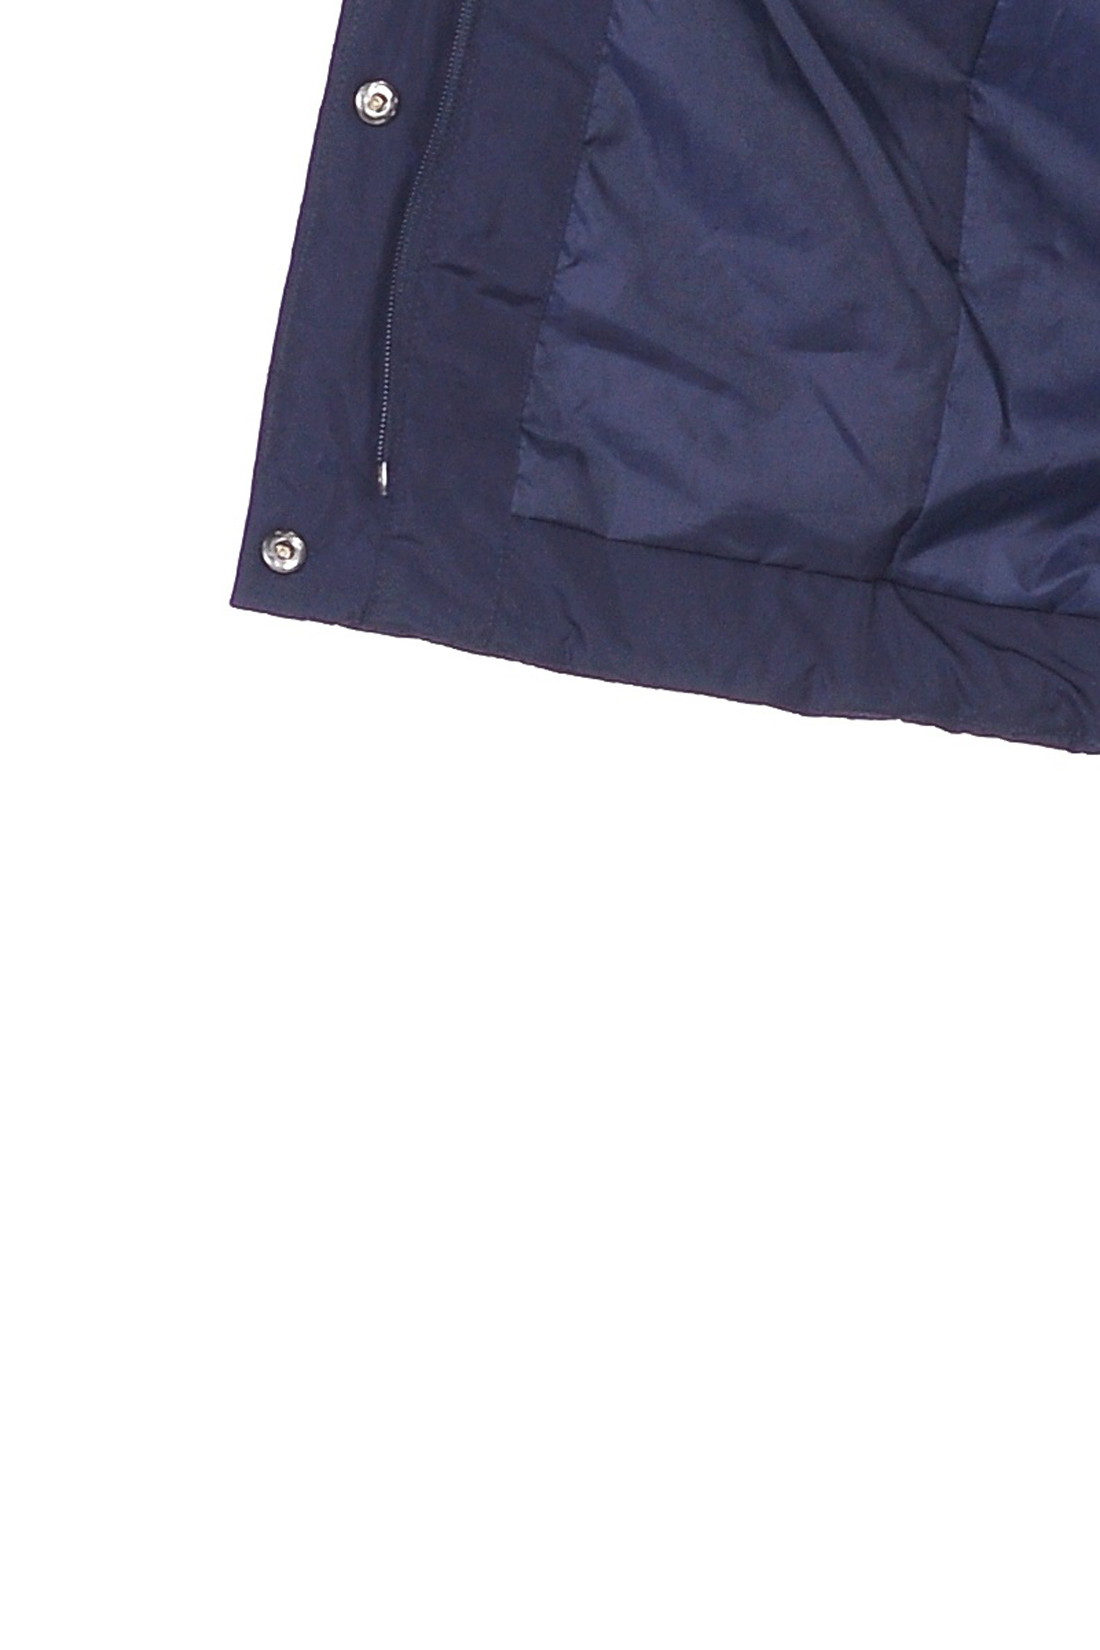 Удлинённая стёганая куртка с капюшоном (арт. baon B039022), размер L, цвет синий Удлинённая стёганая куртка с капюшоном (арт. baon B039022) - фото 4